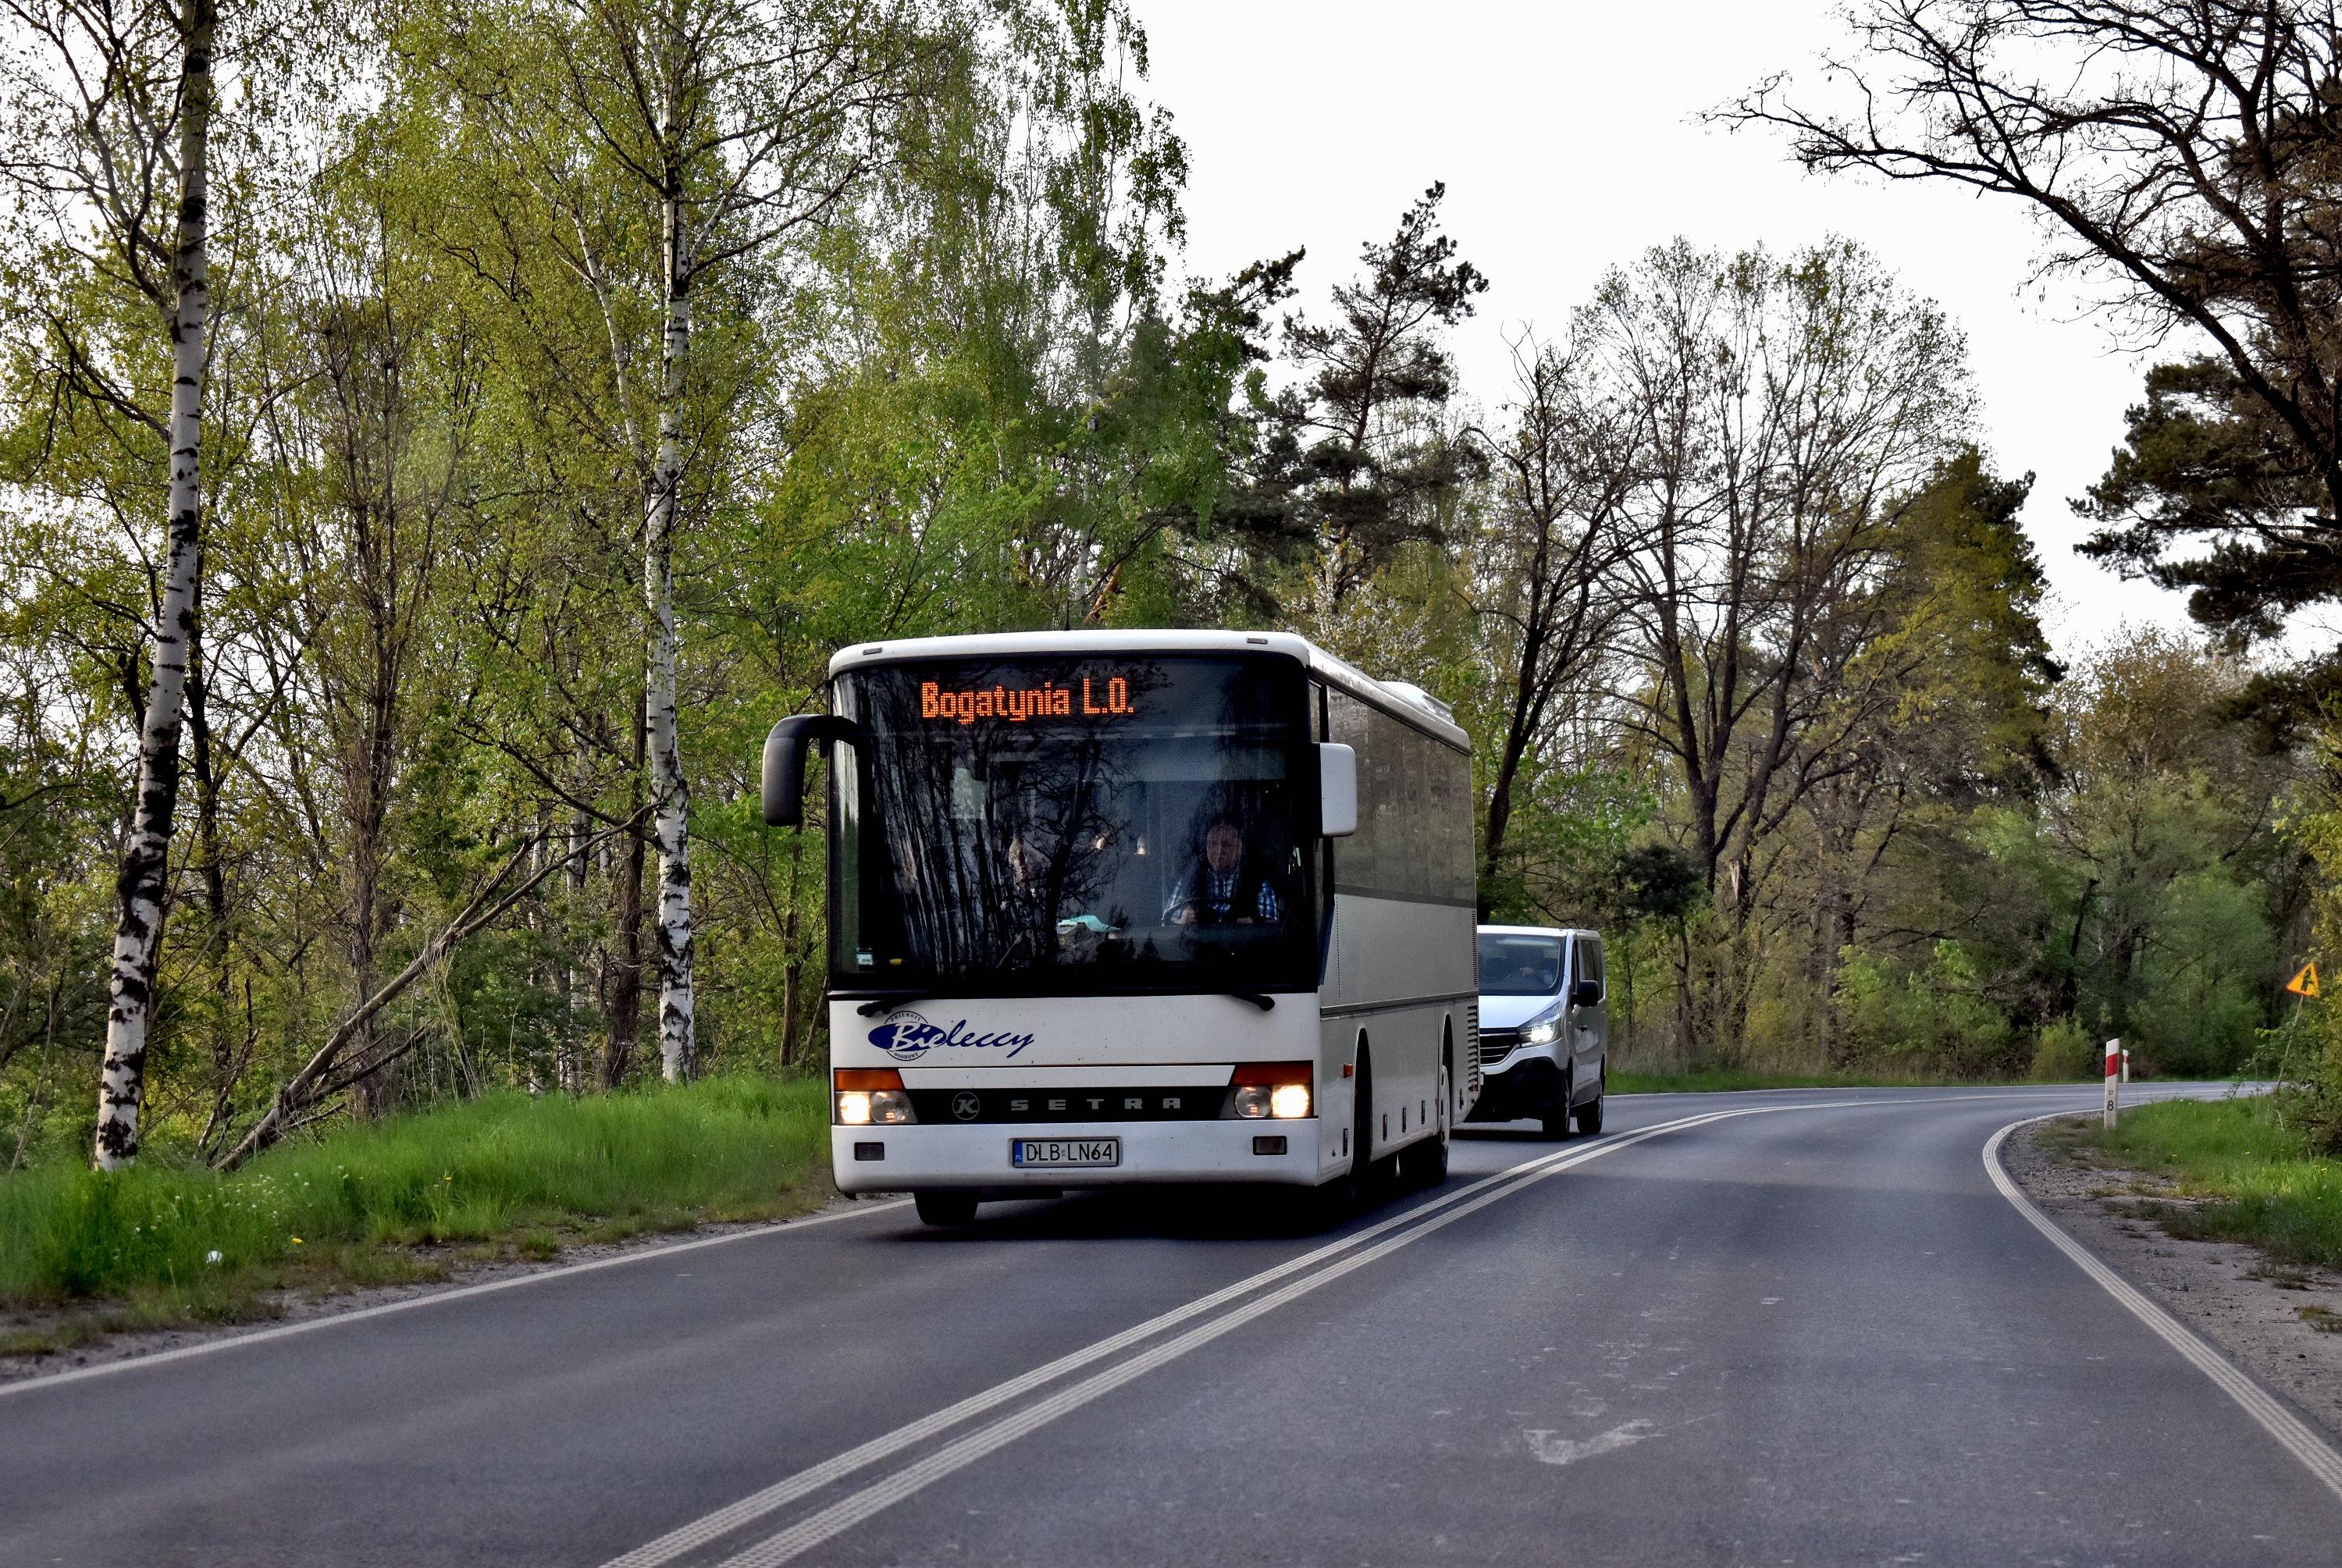 PKS (Busverkehr) Bogatynia L.O. 